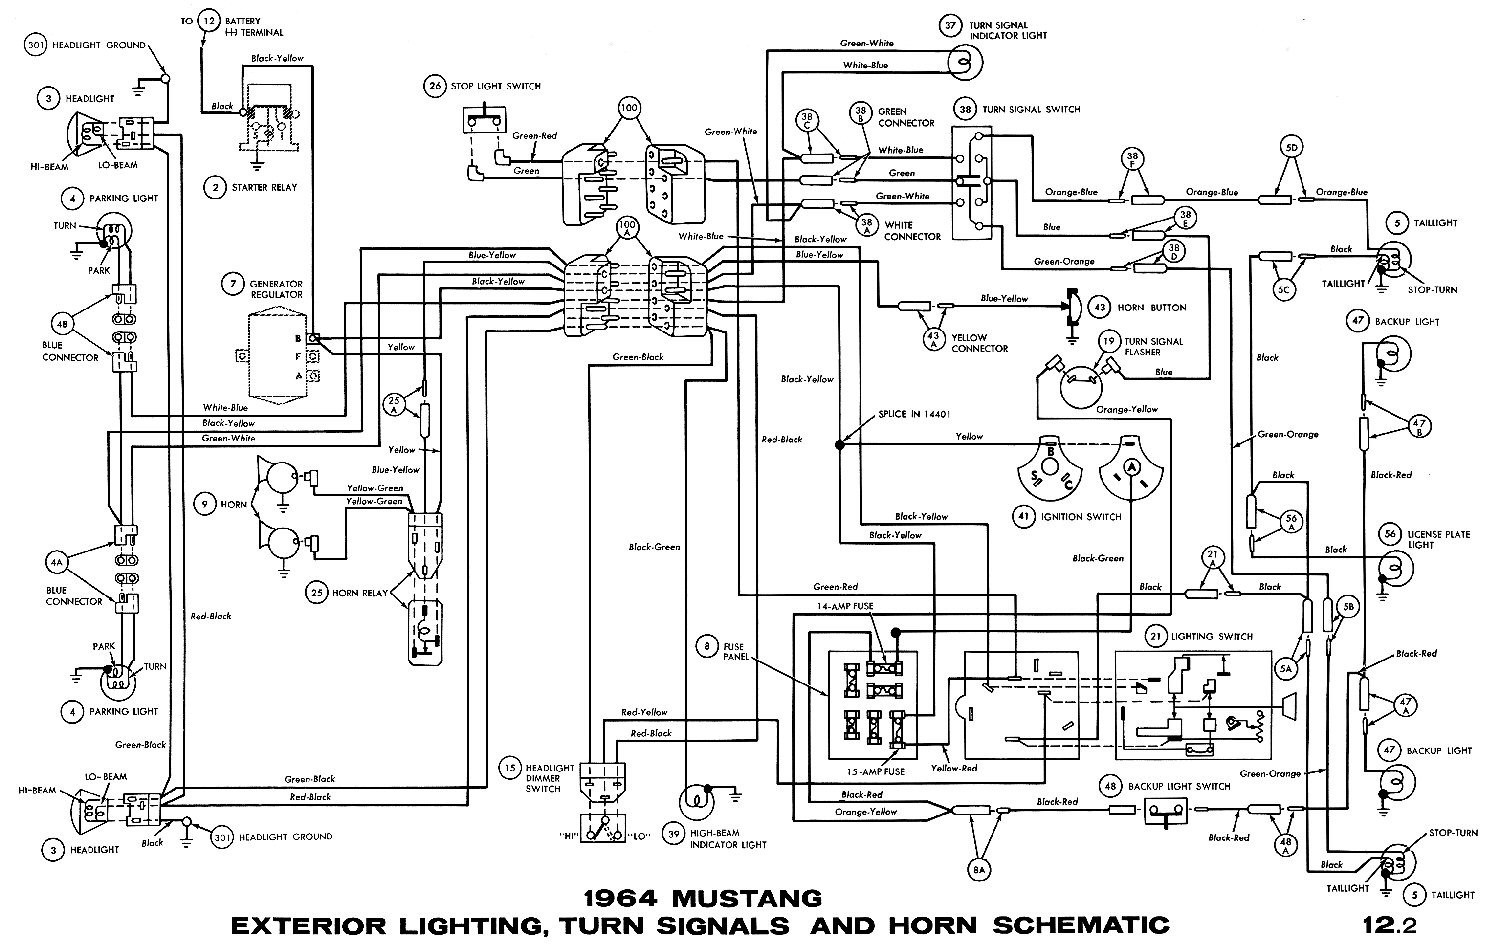 1965 Mustang Wiring Diagram New 1965 Mustang Wiring Diagrams Average Joe Restoration for Alluring